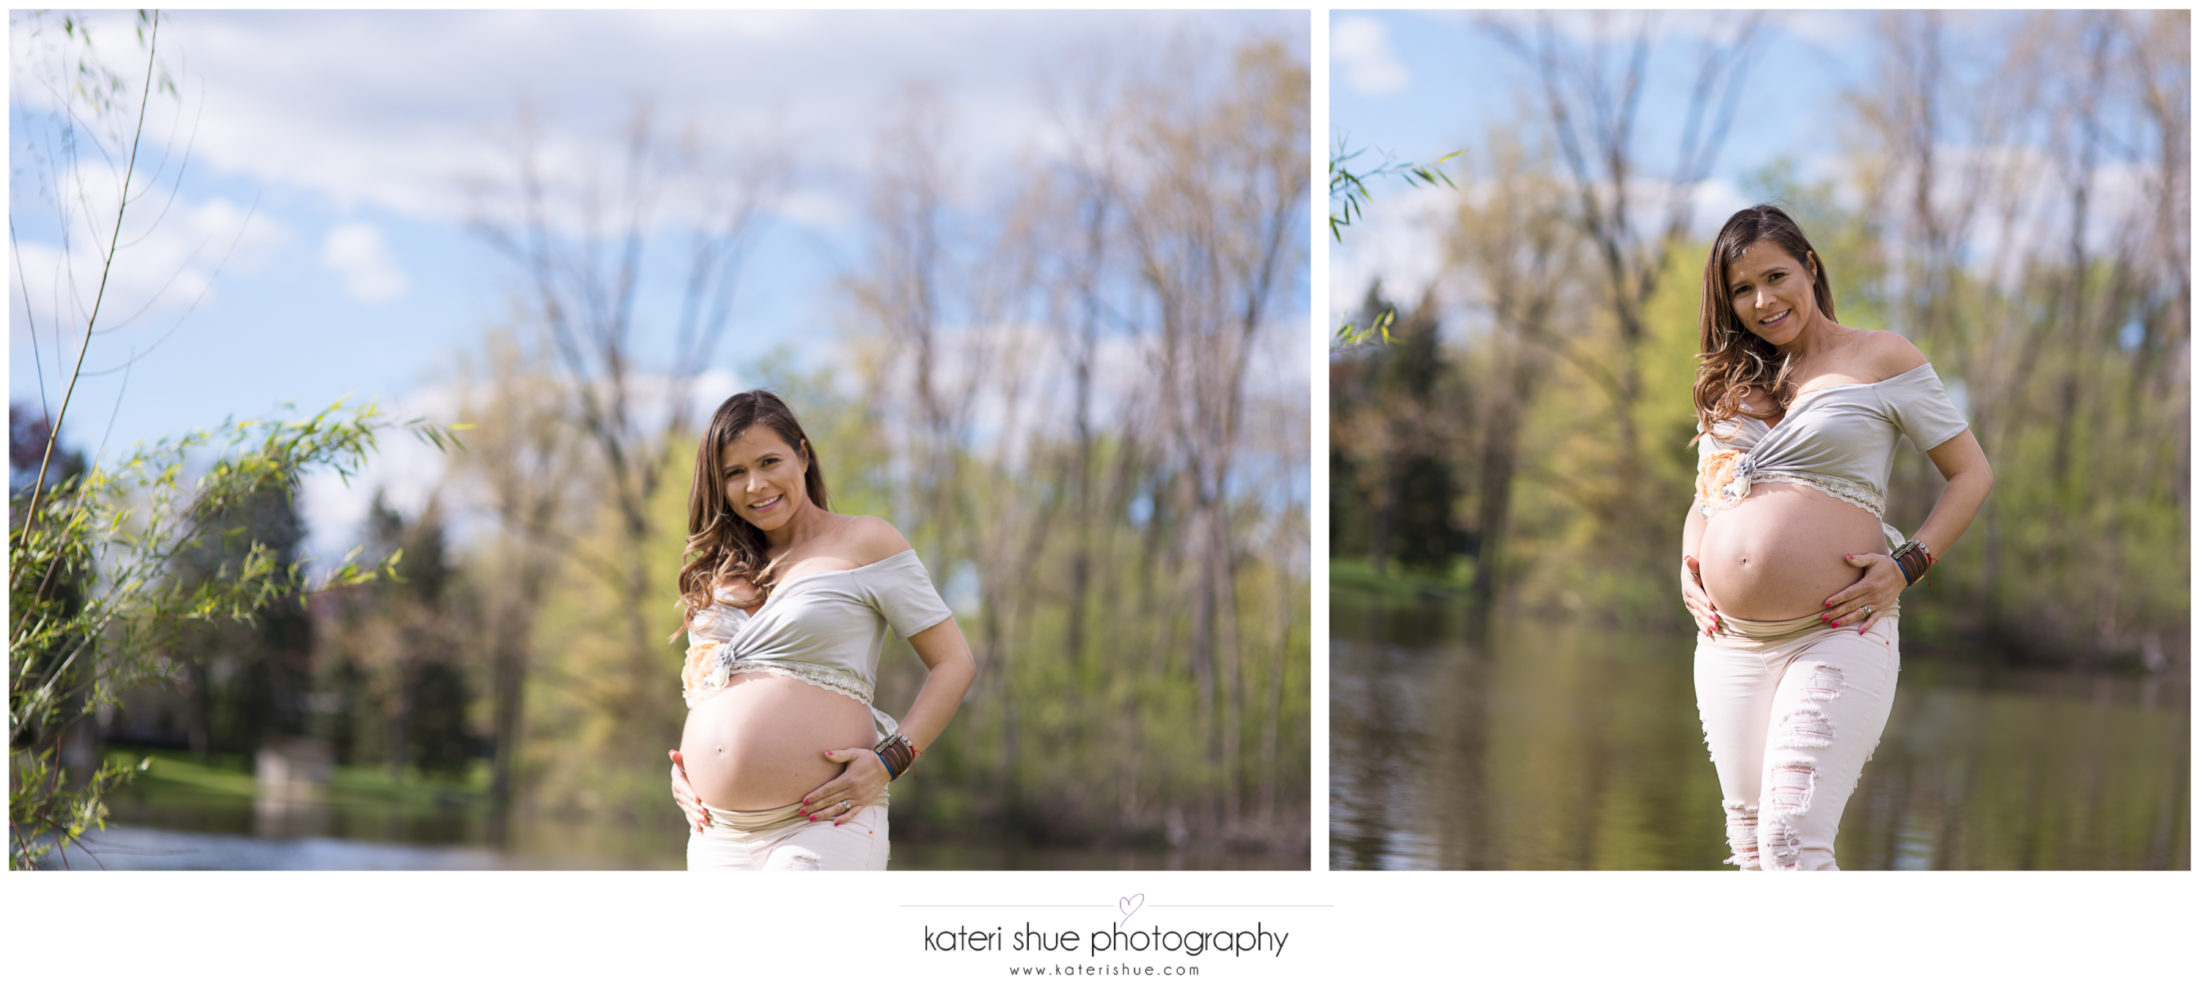 Yovana, metro detroit, maternity photographer, west bloomfield, motherhood, lifestyle